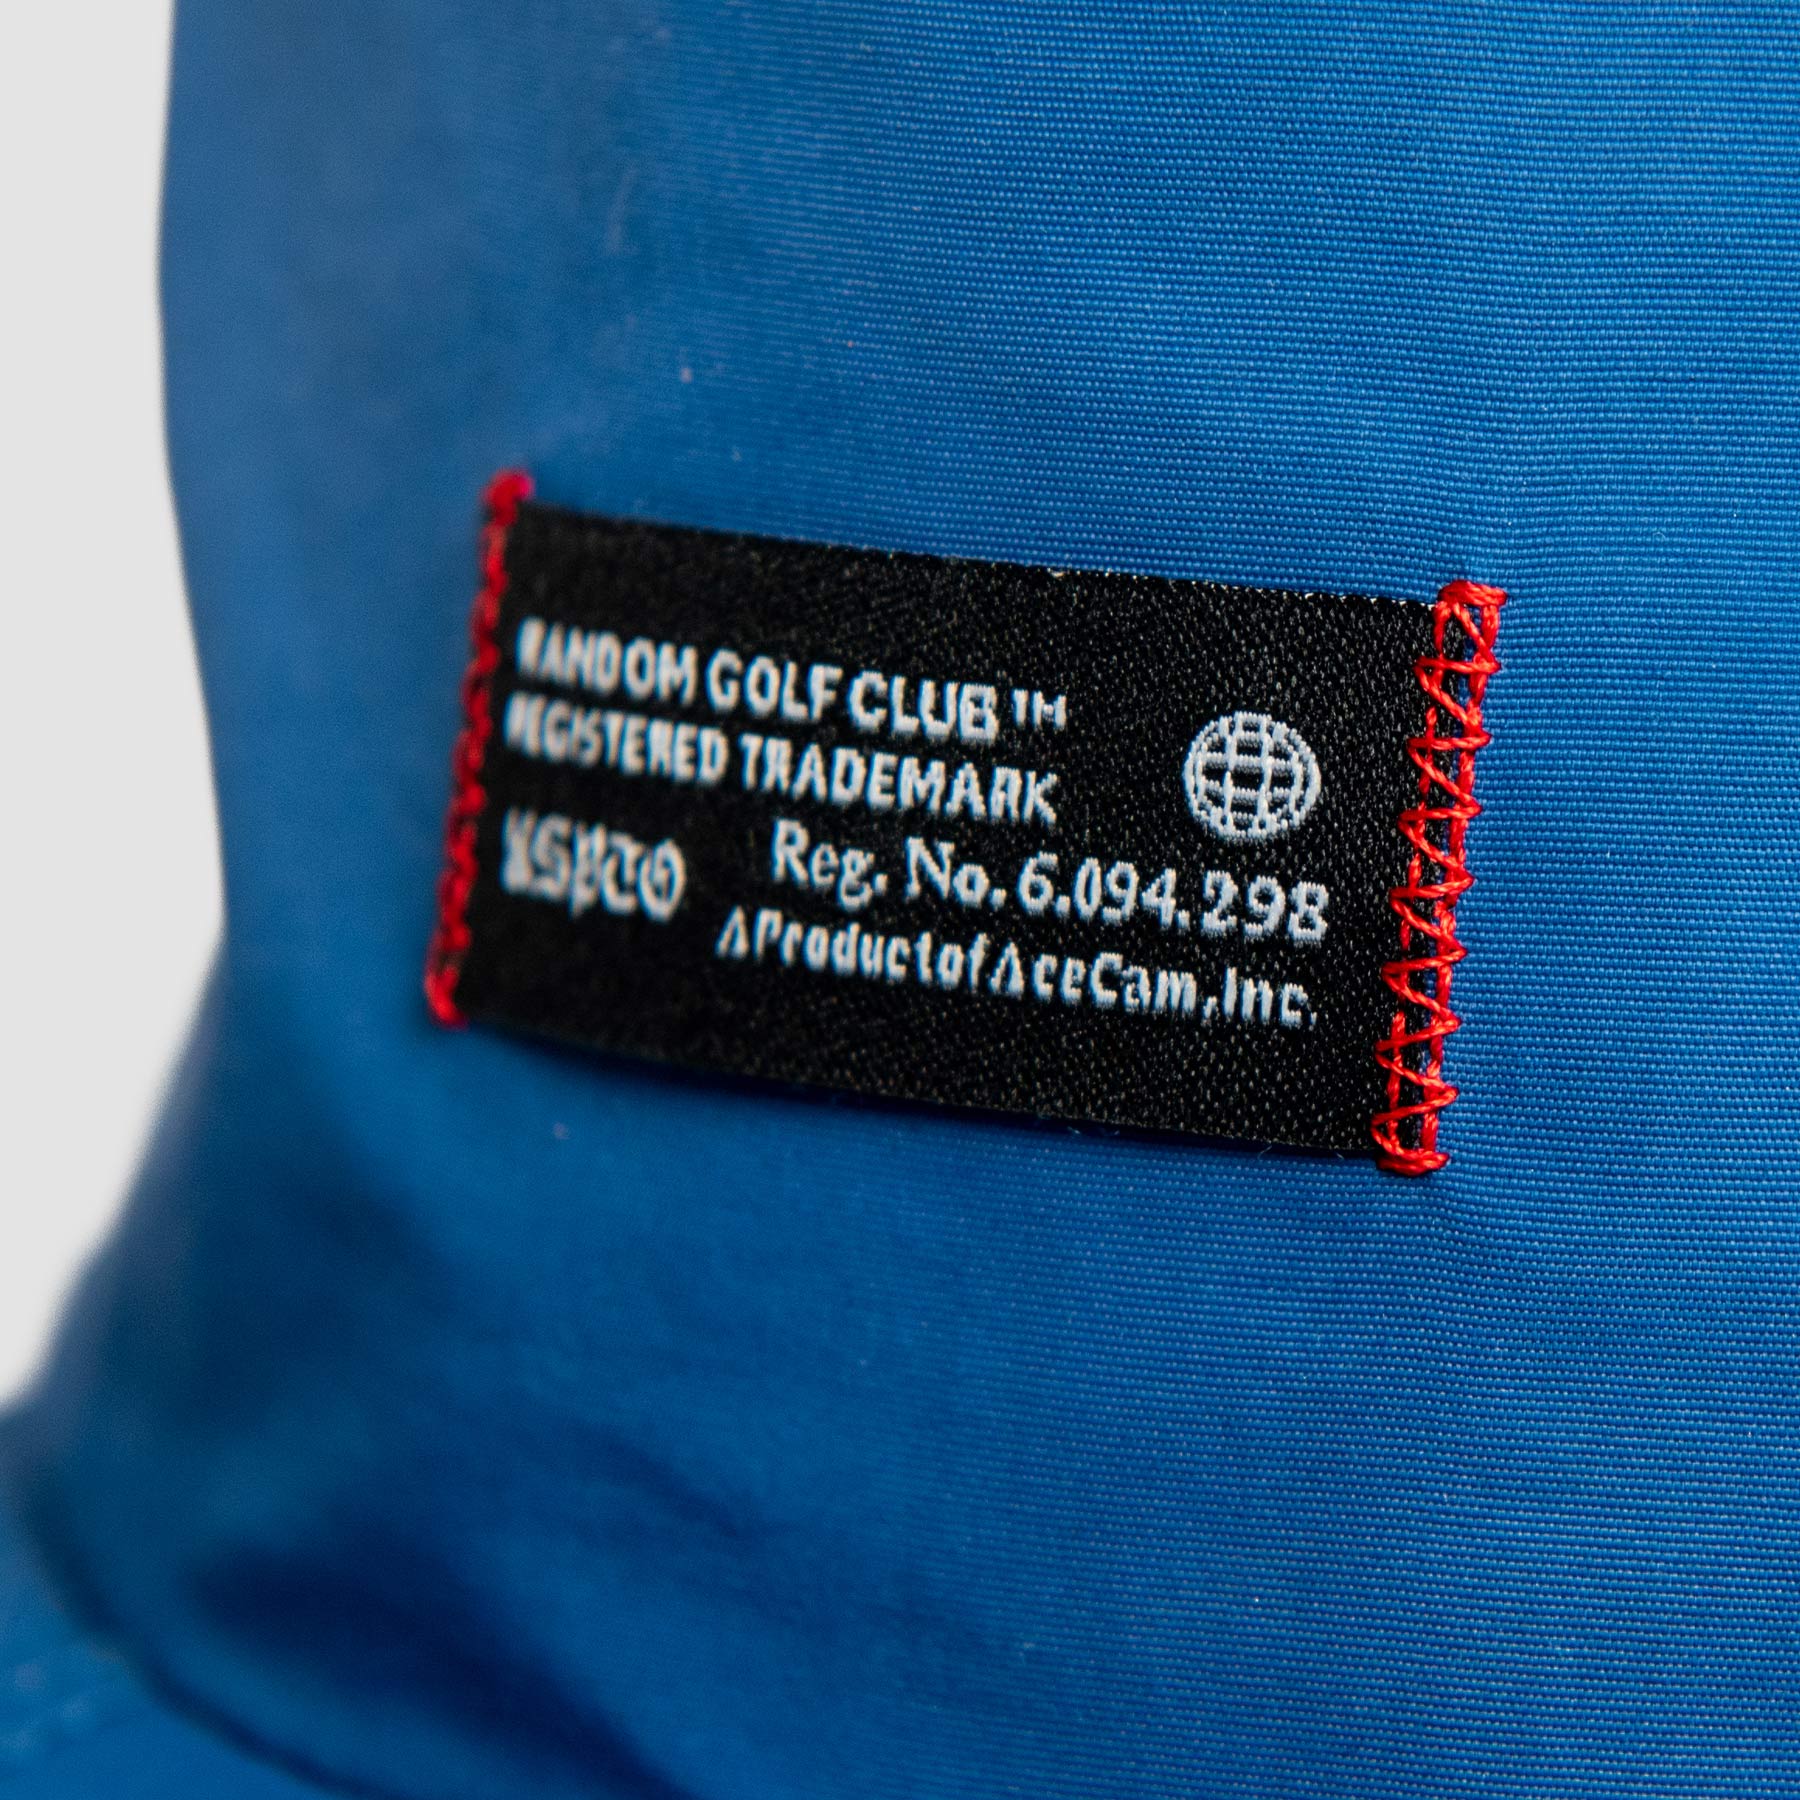 Trademark Hat | Random Golf Club